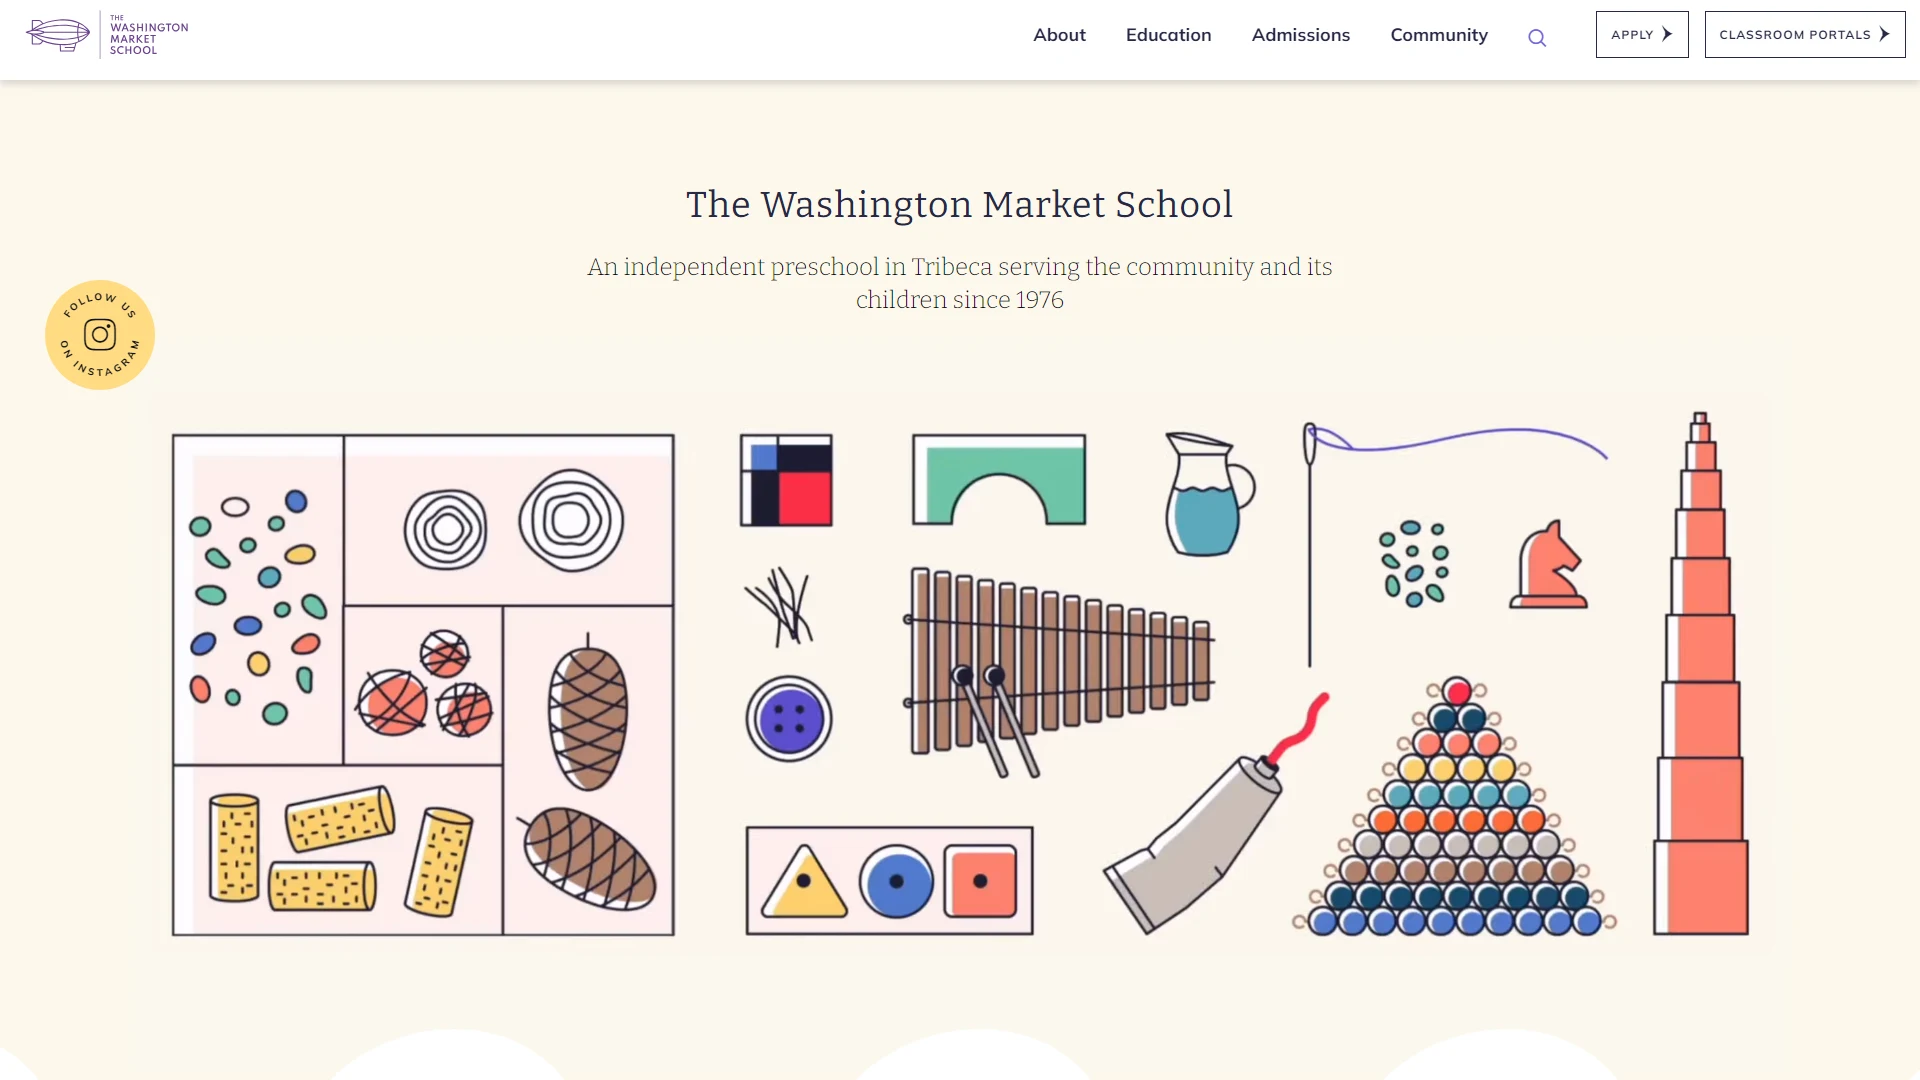  The Washington Market School